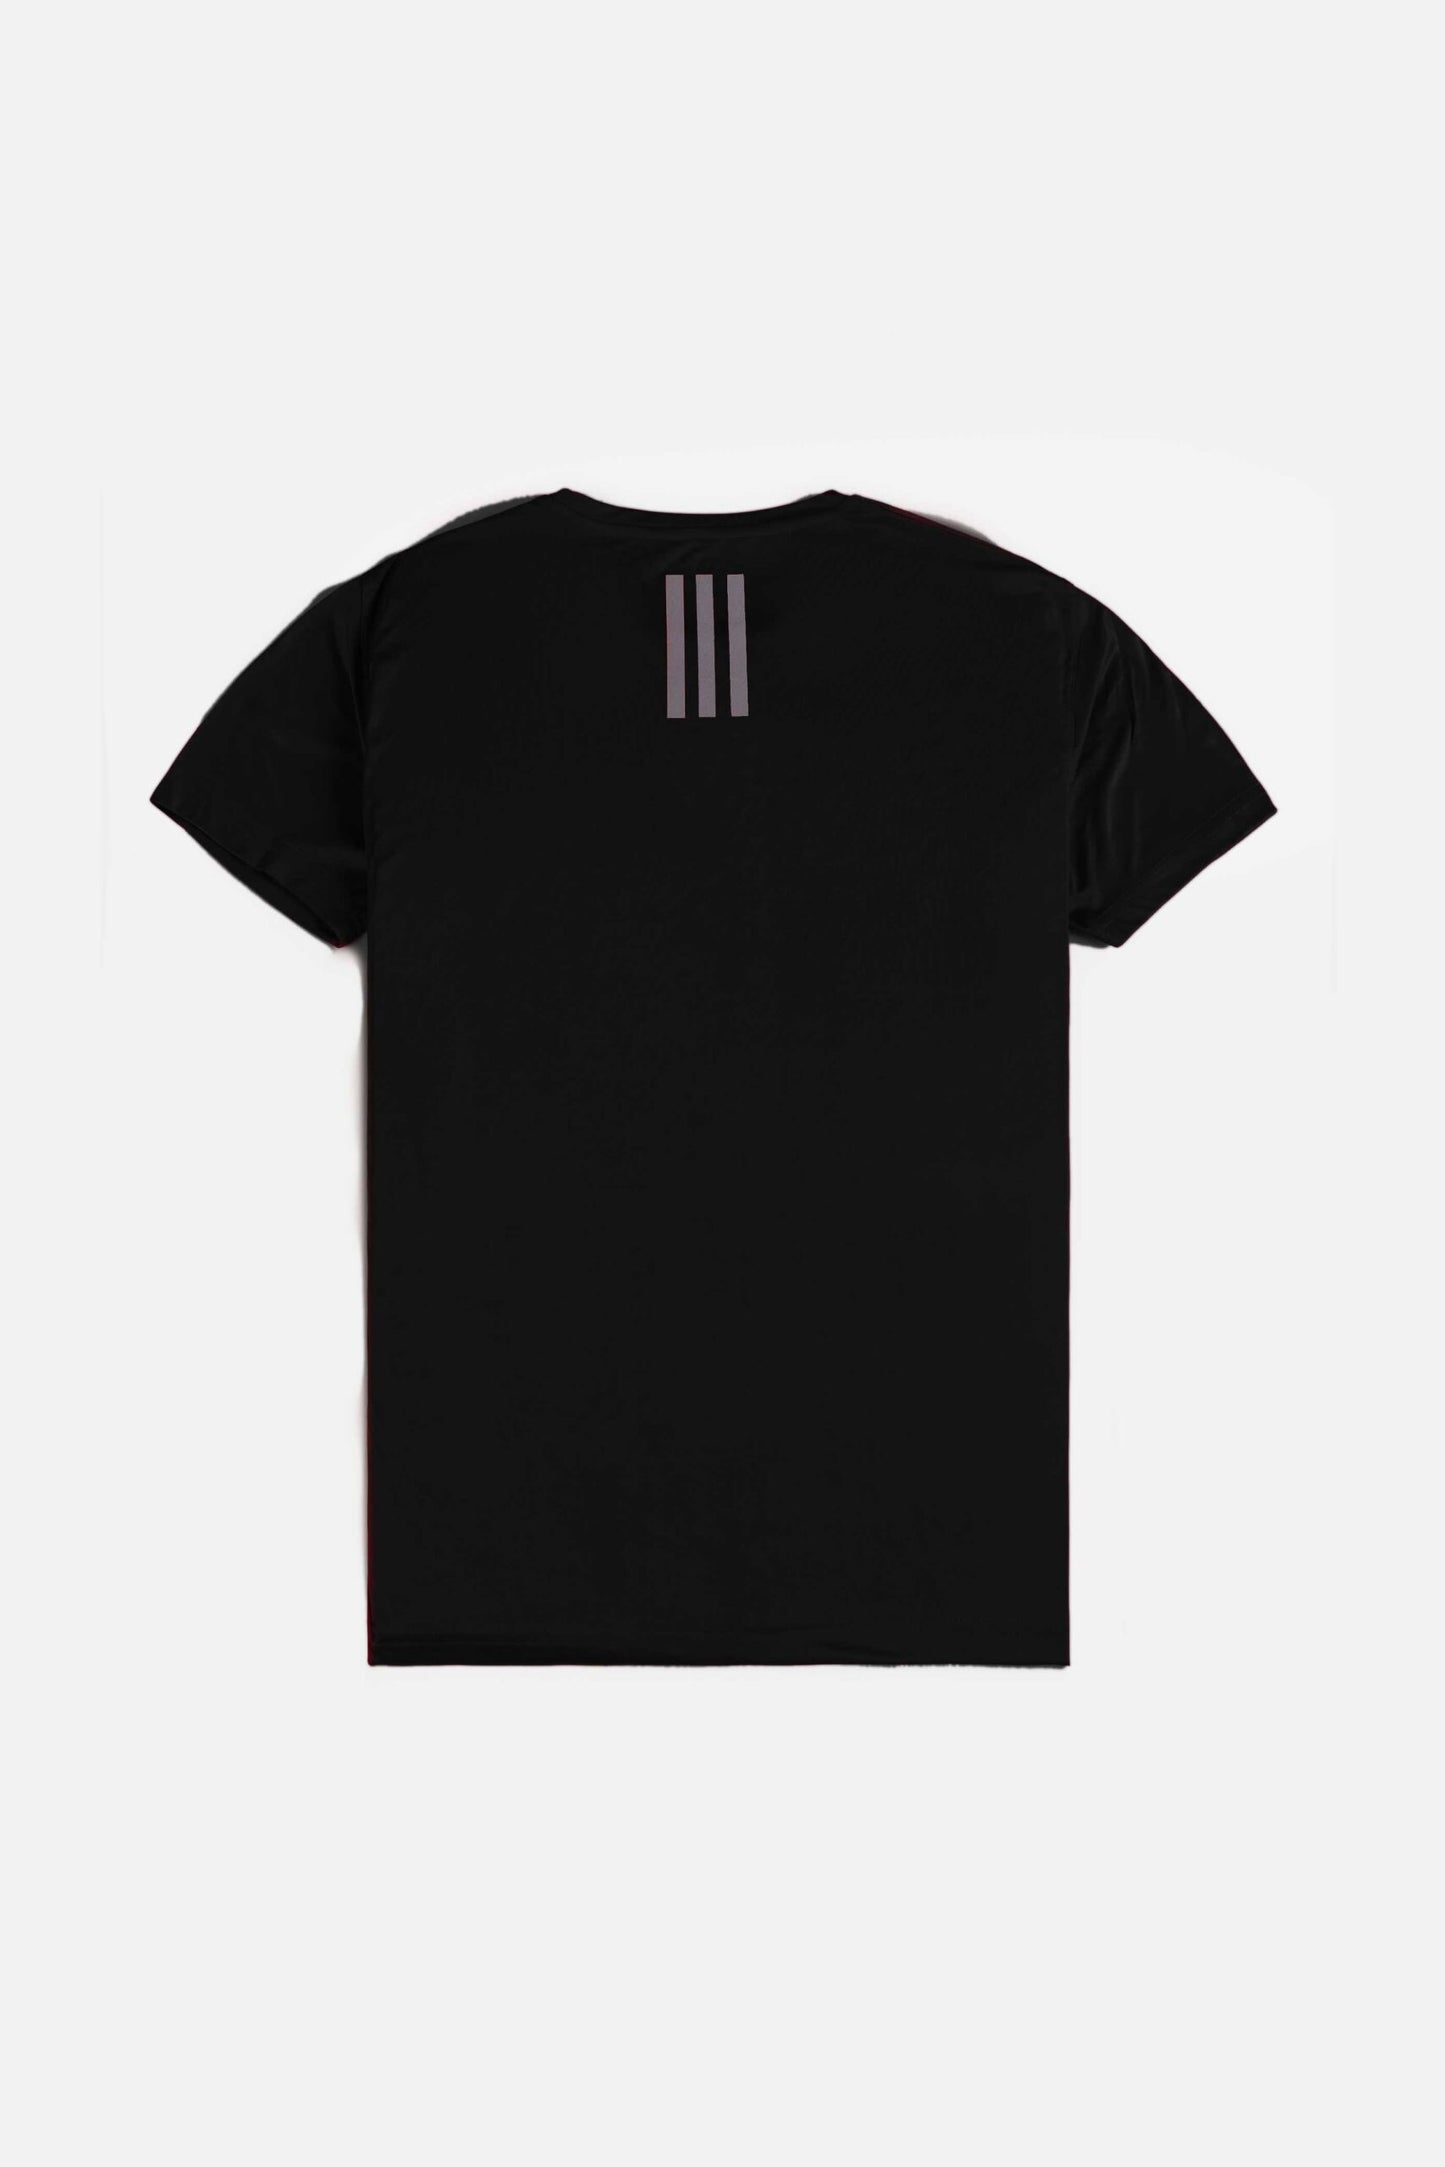 Adidas Basic Sports T Shirt – Black